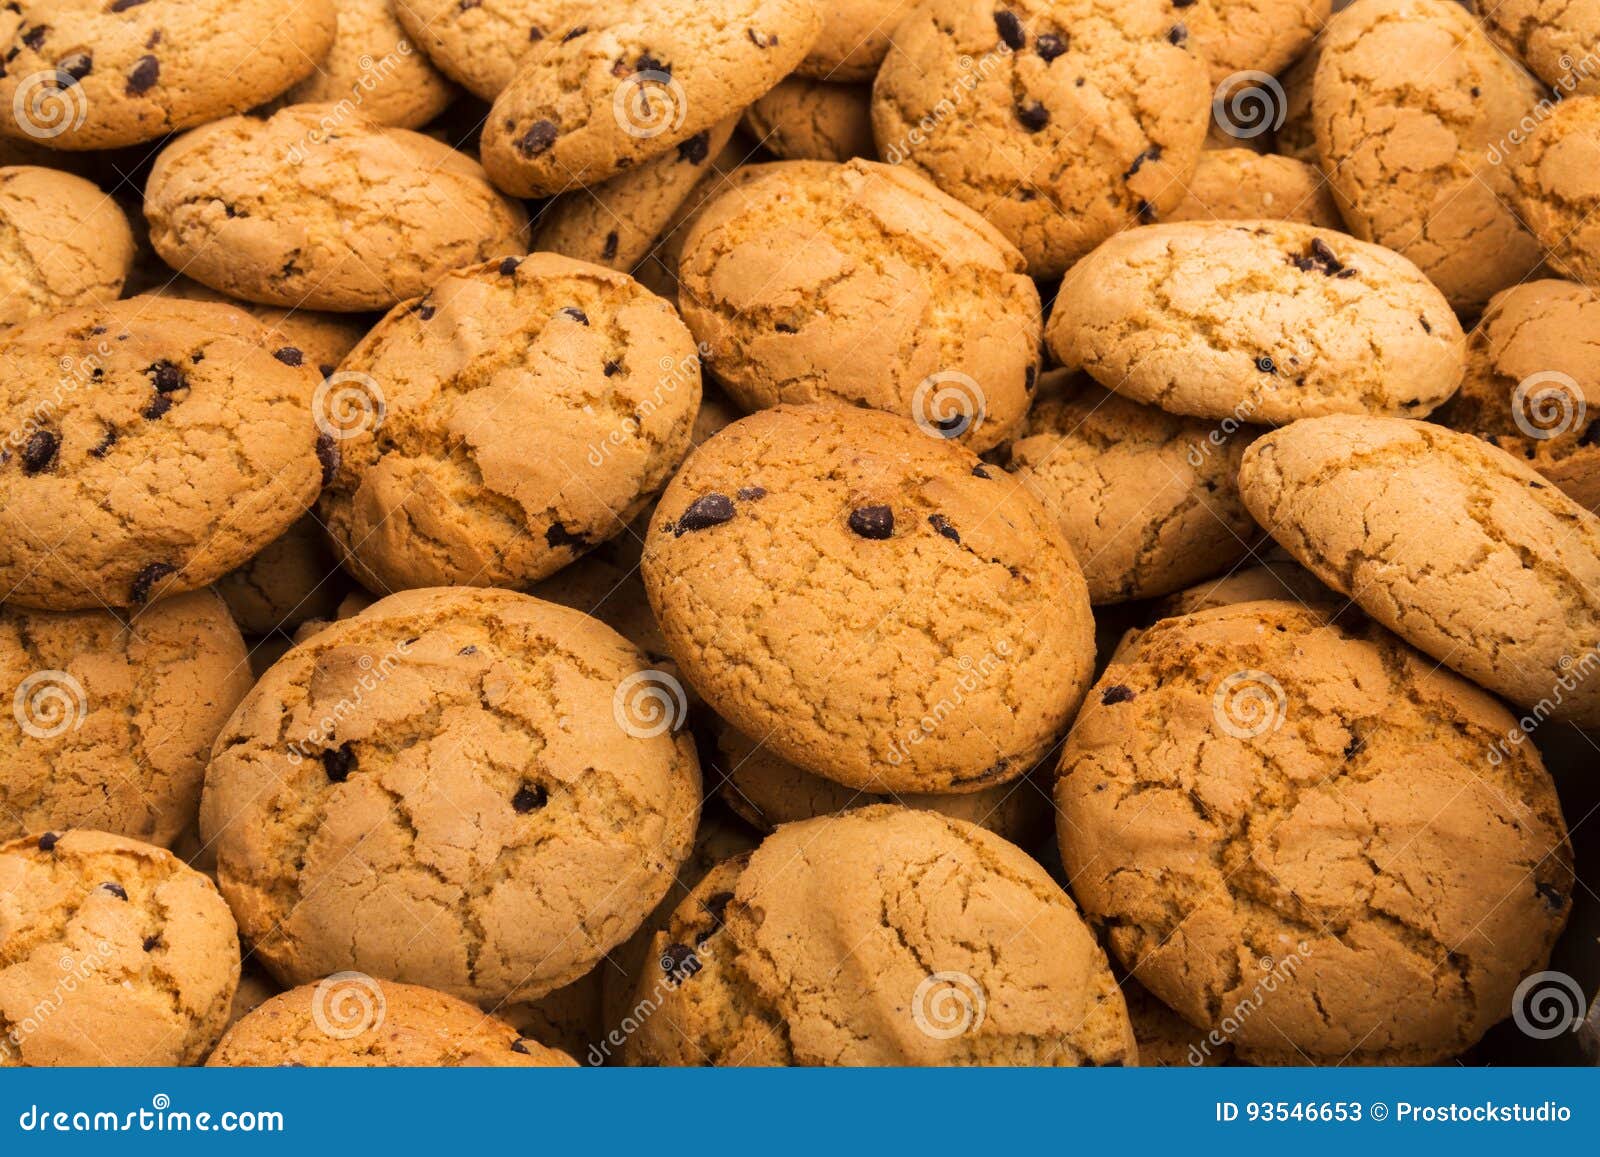 REGMA - Caja de galletas